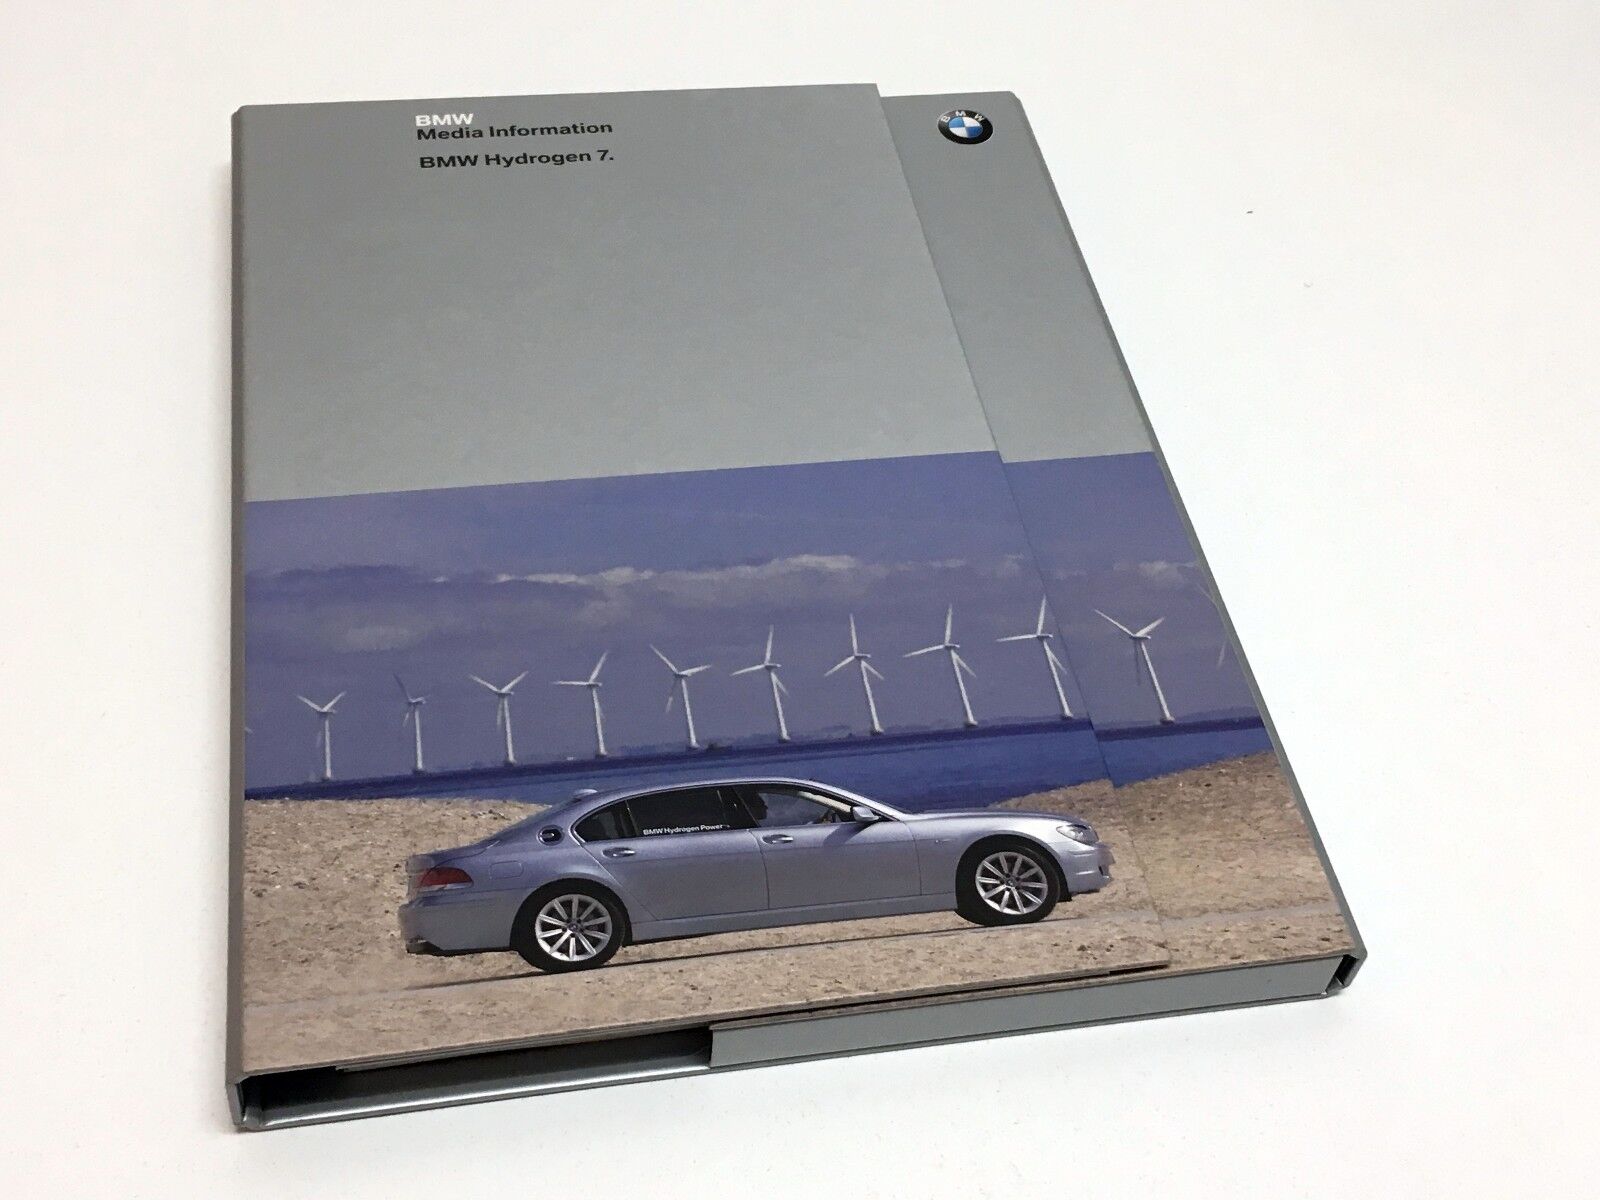 2007 BMW Hydrogen 7 E65 Press Kit Brochure